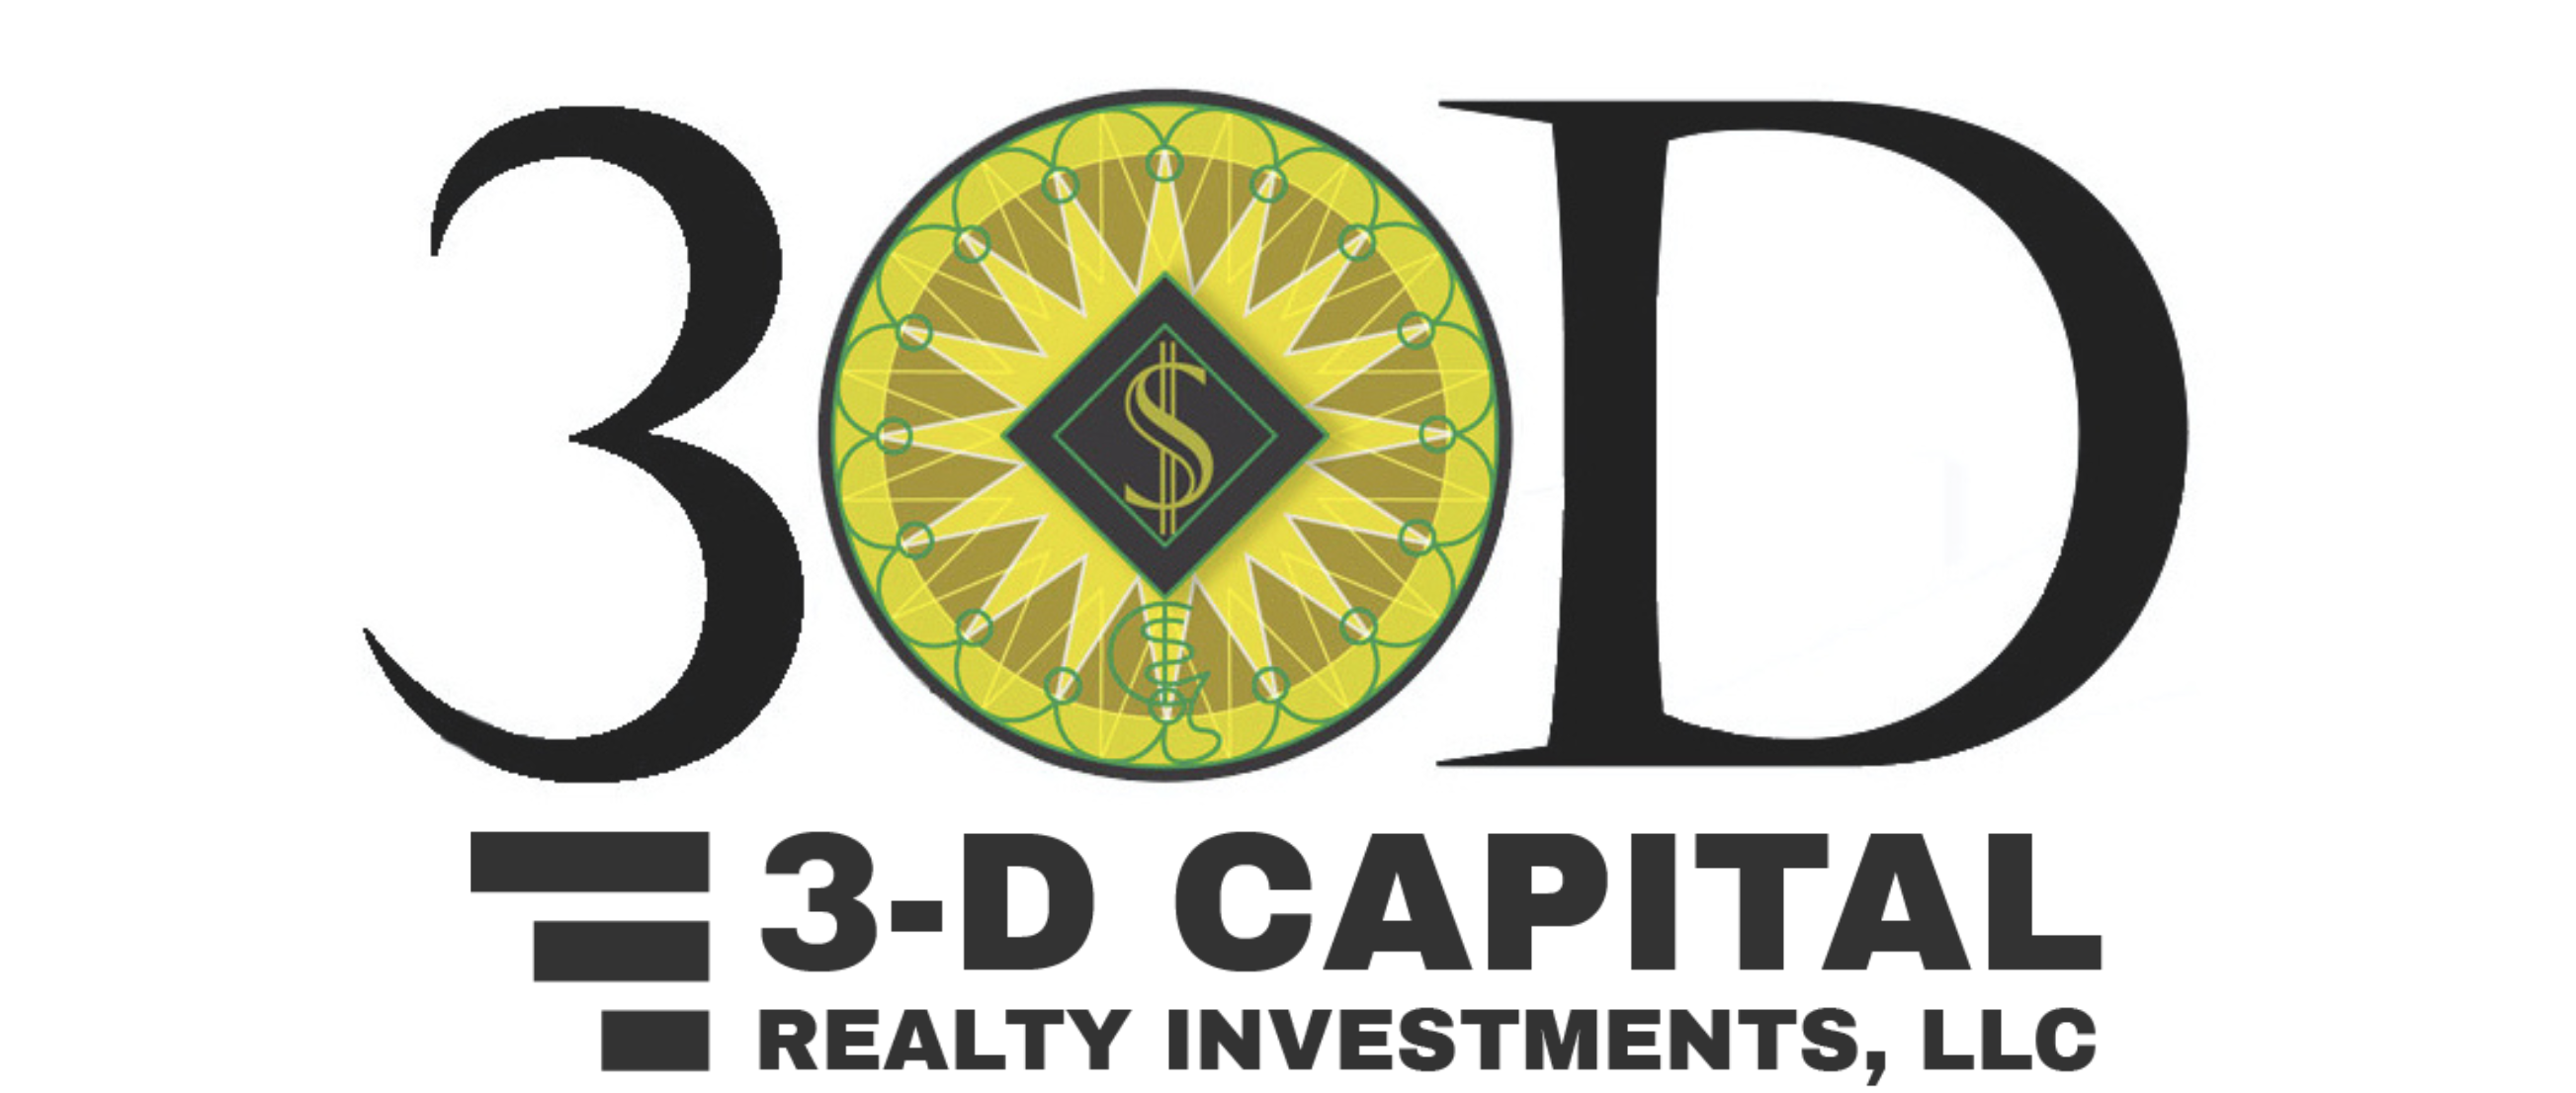 3-D Capital Realty Investments llc.